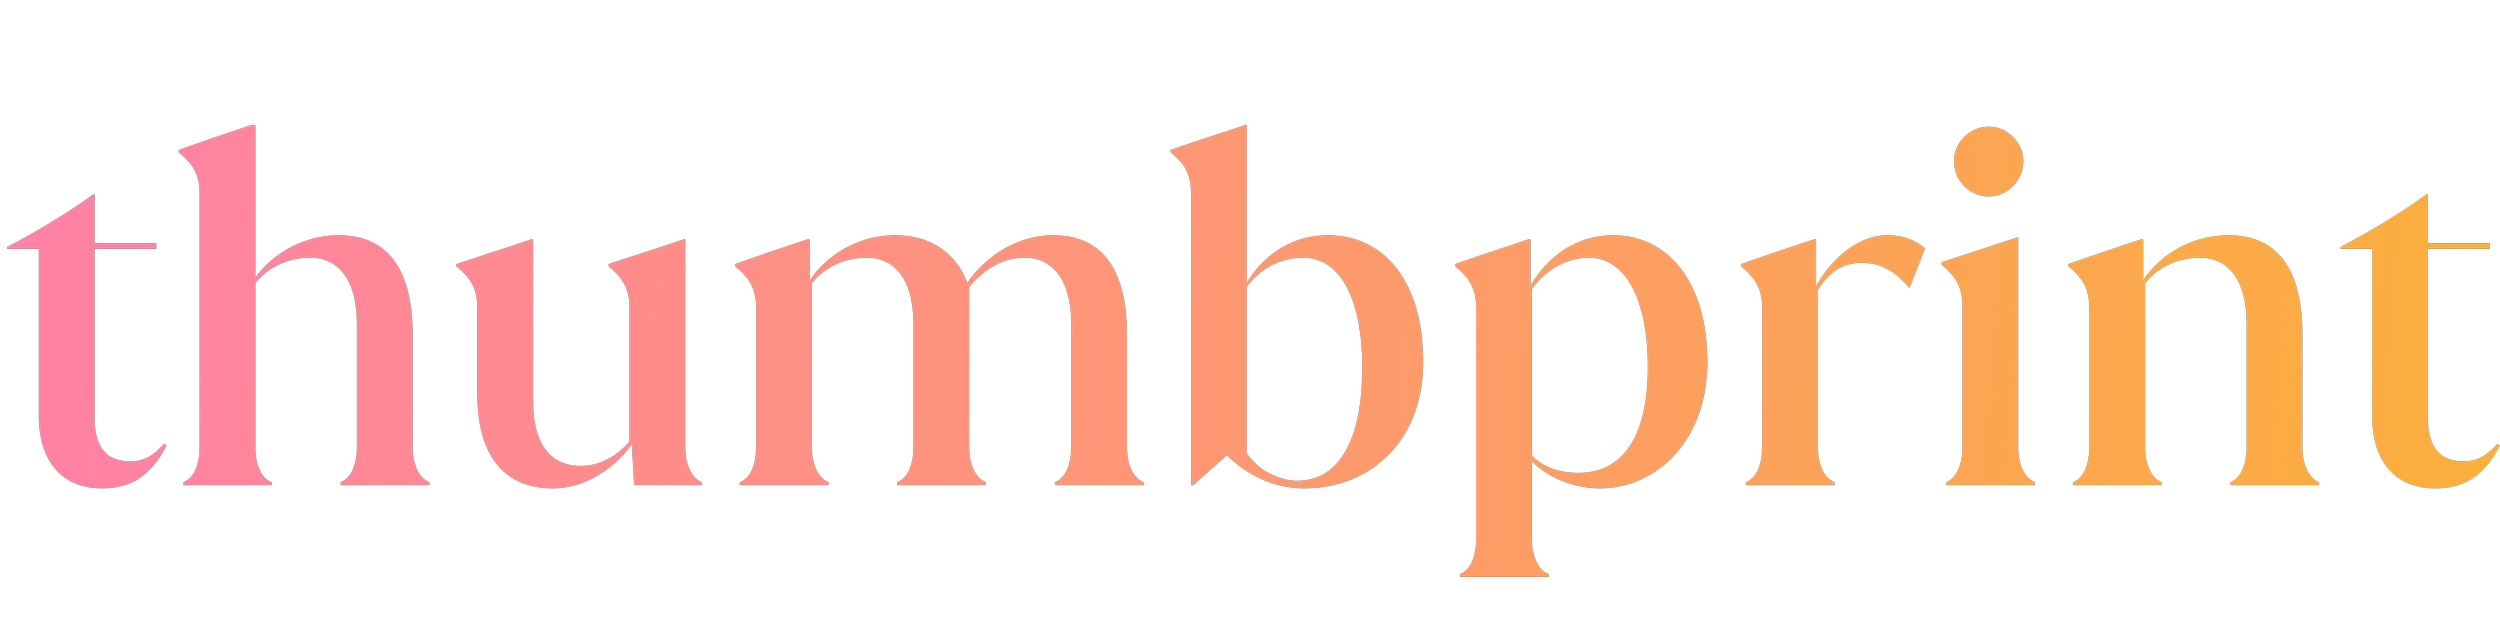 BIG Tumbprint logo color - transparent BG.png